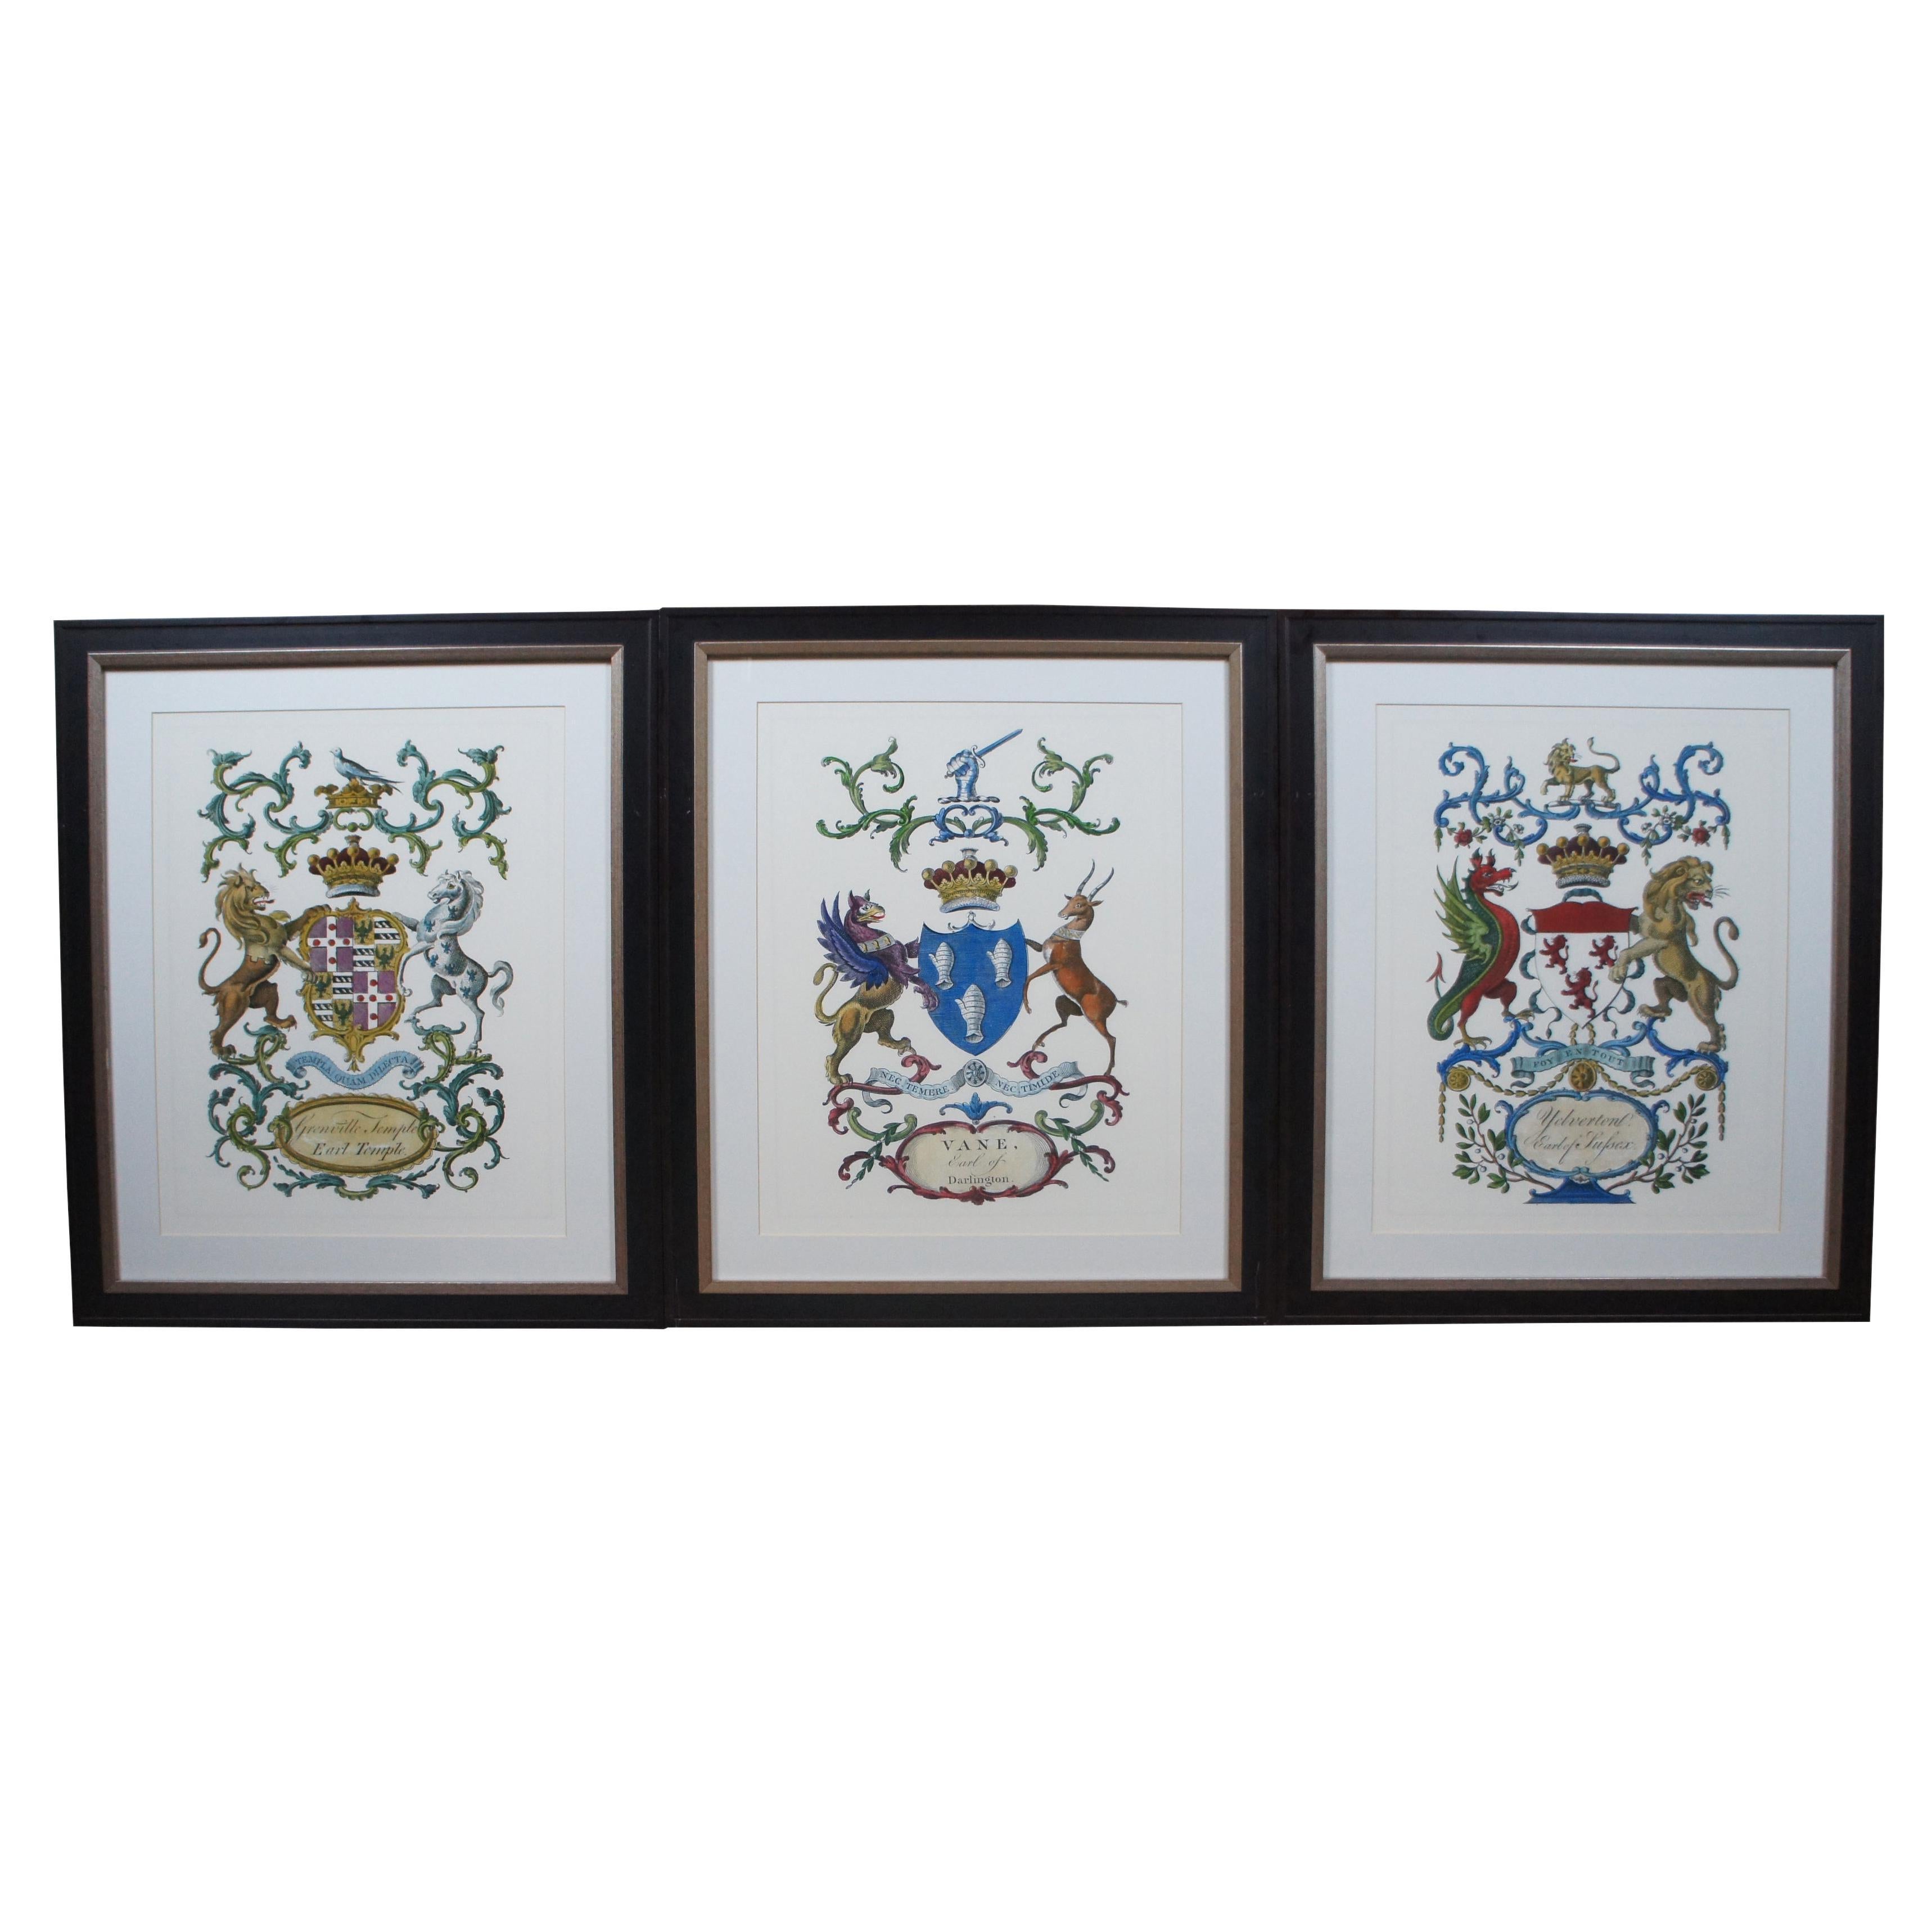 3 British Heraldic Lithograph Prints Coat of Arms Grenville Vane Yelverton Crest